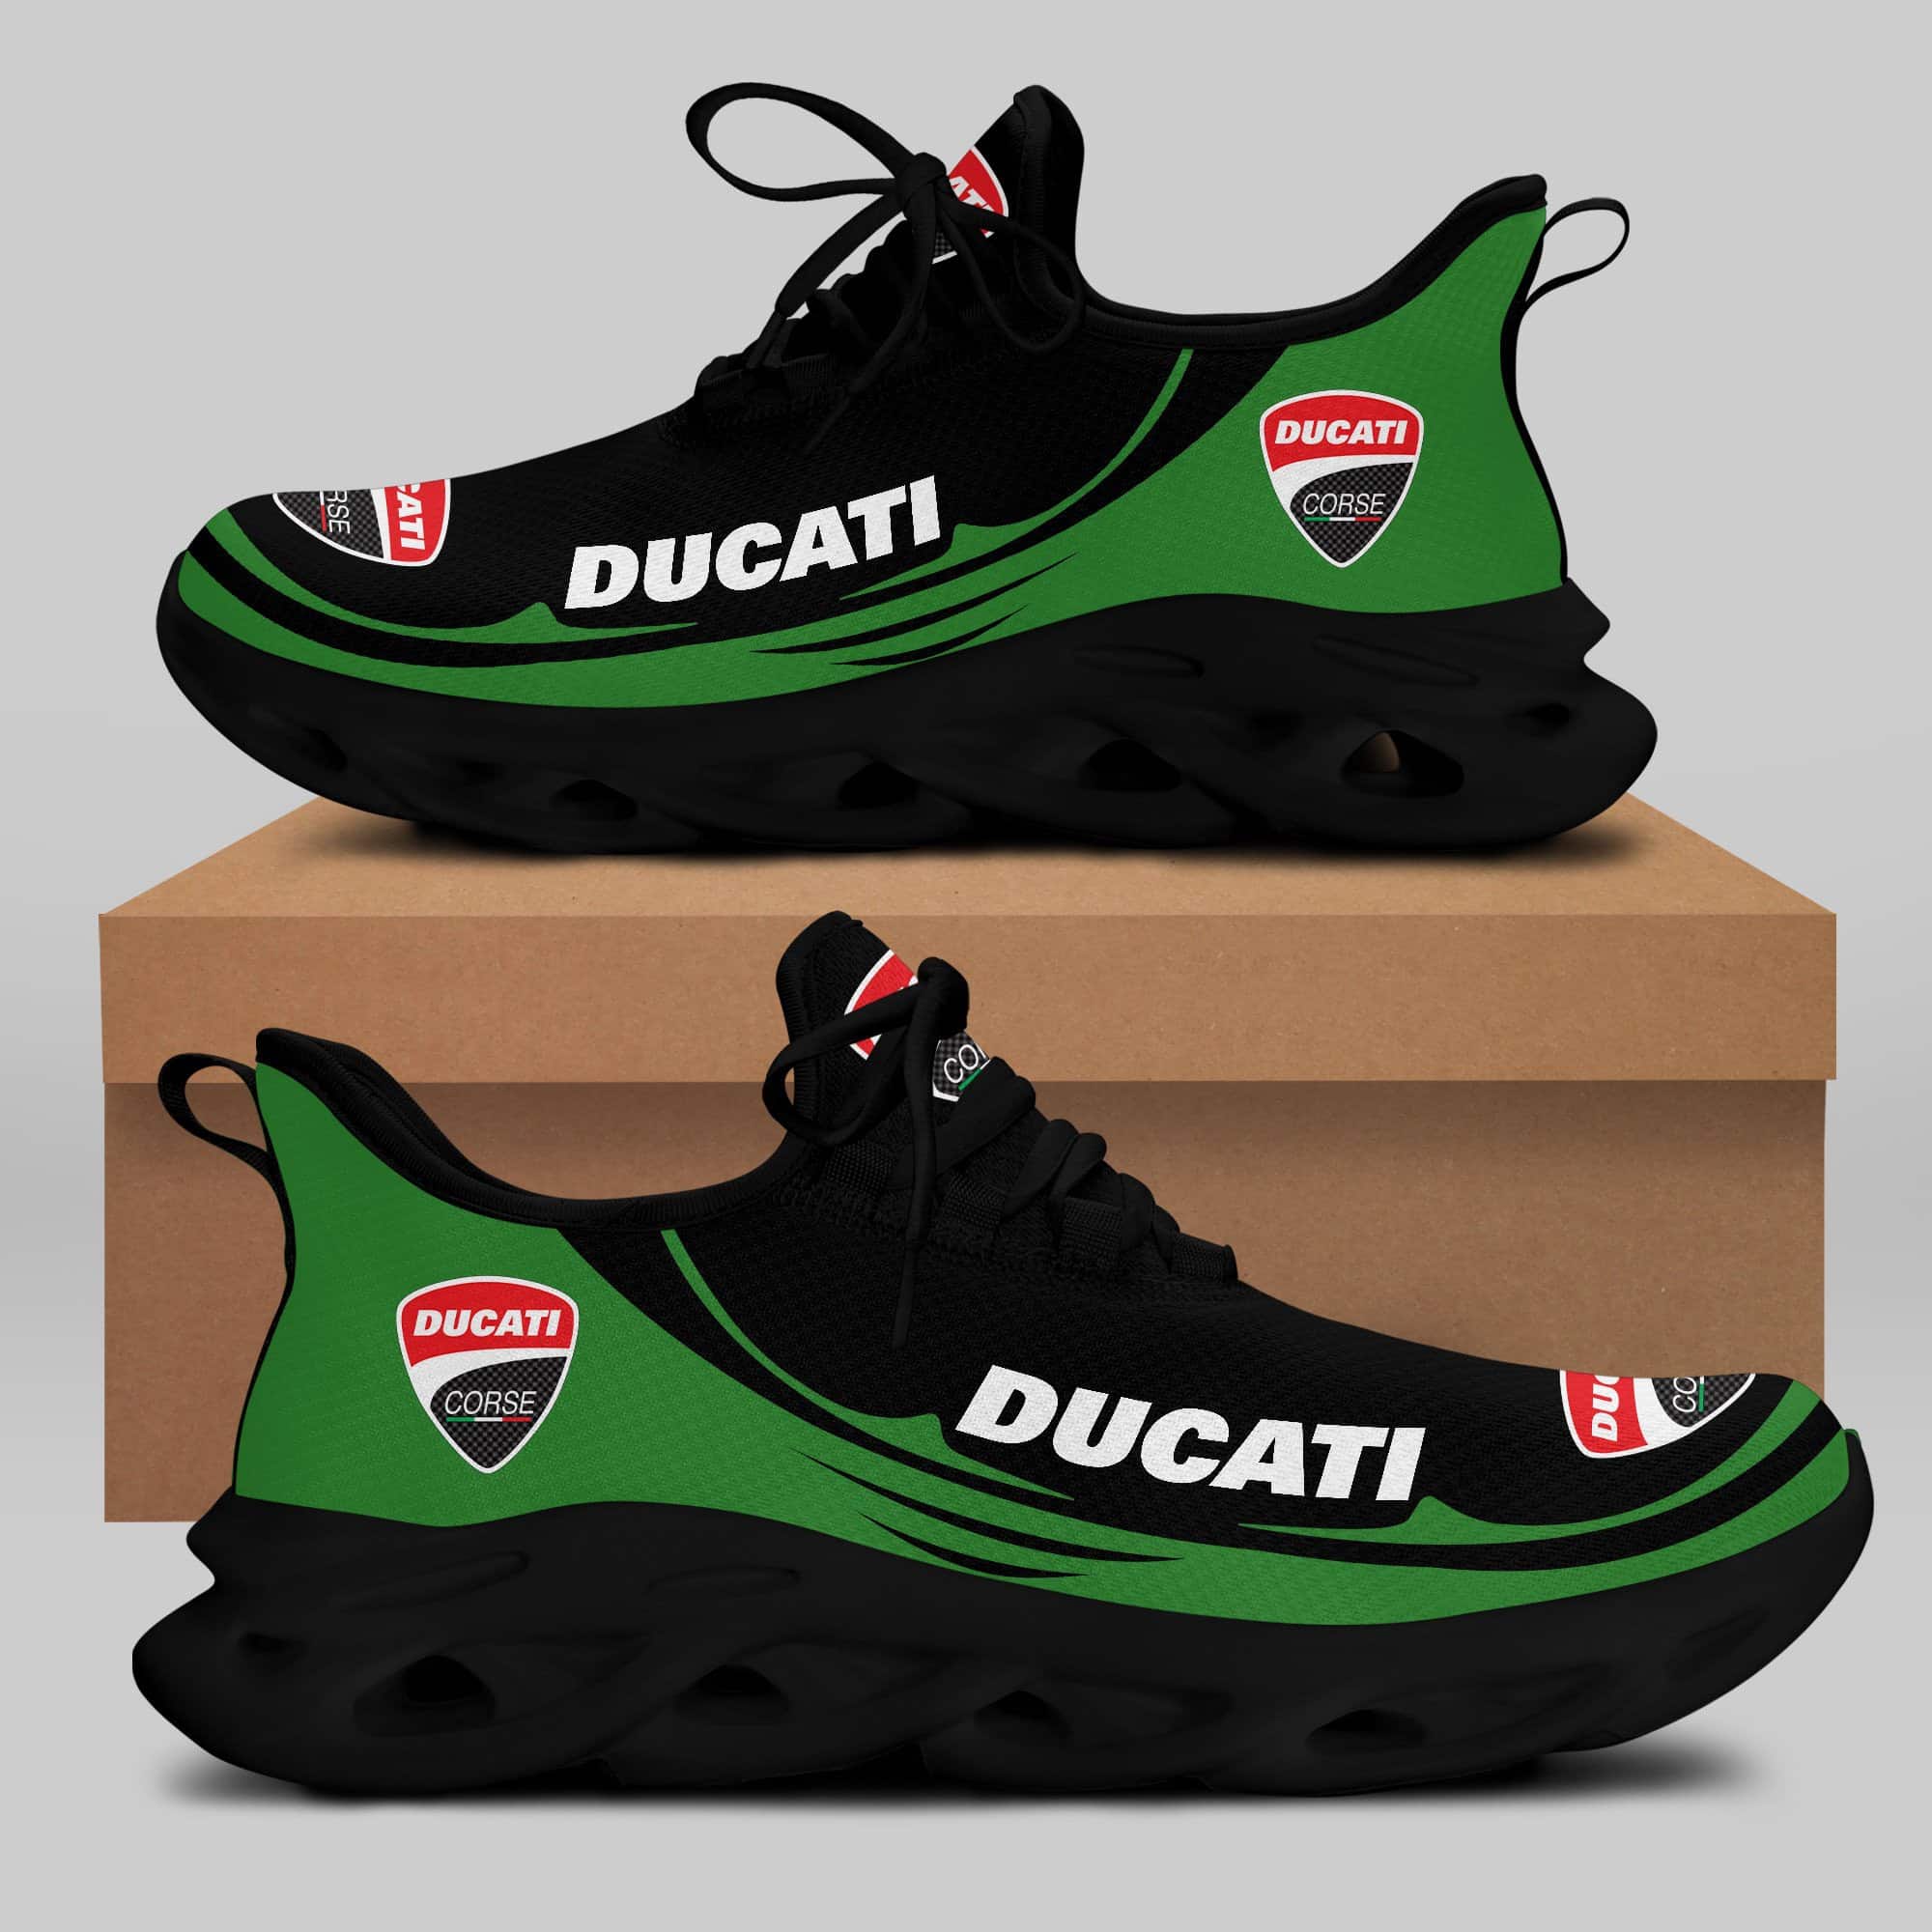 Ducati Racing Running Shoes Max Soul Shoes Sneakers Ver 45 1